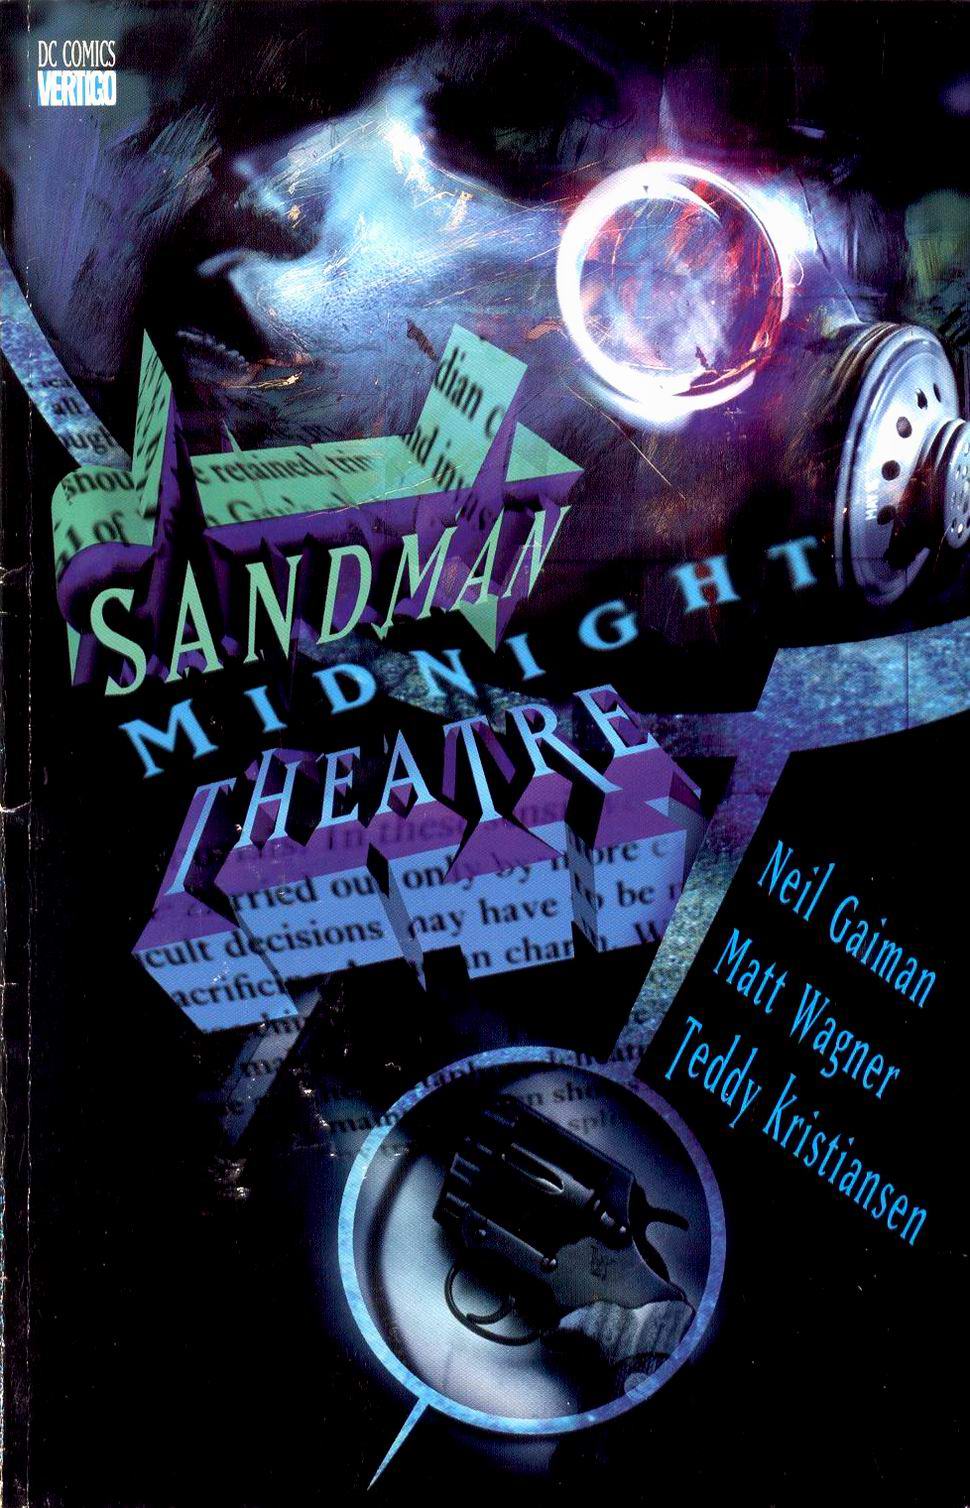 Read online Sandman Midnight Theatre comic -  Issue # Full - 2